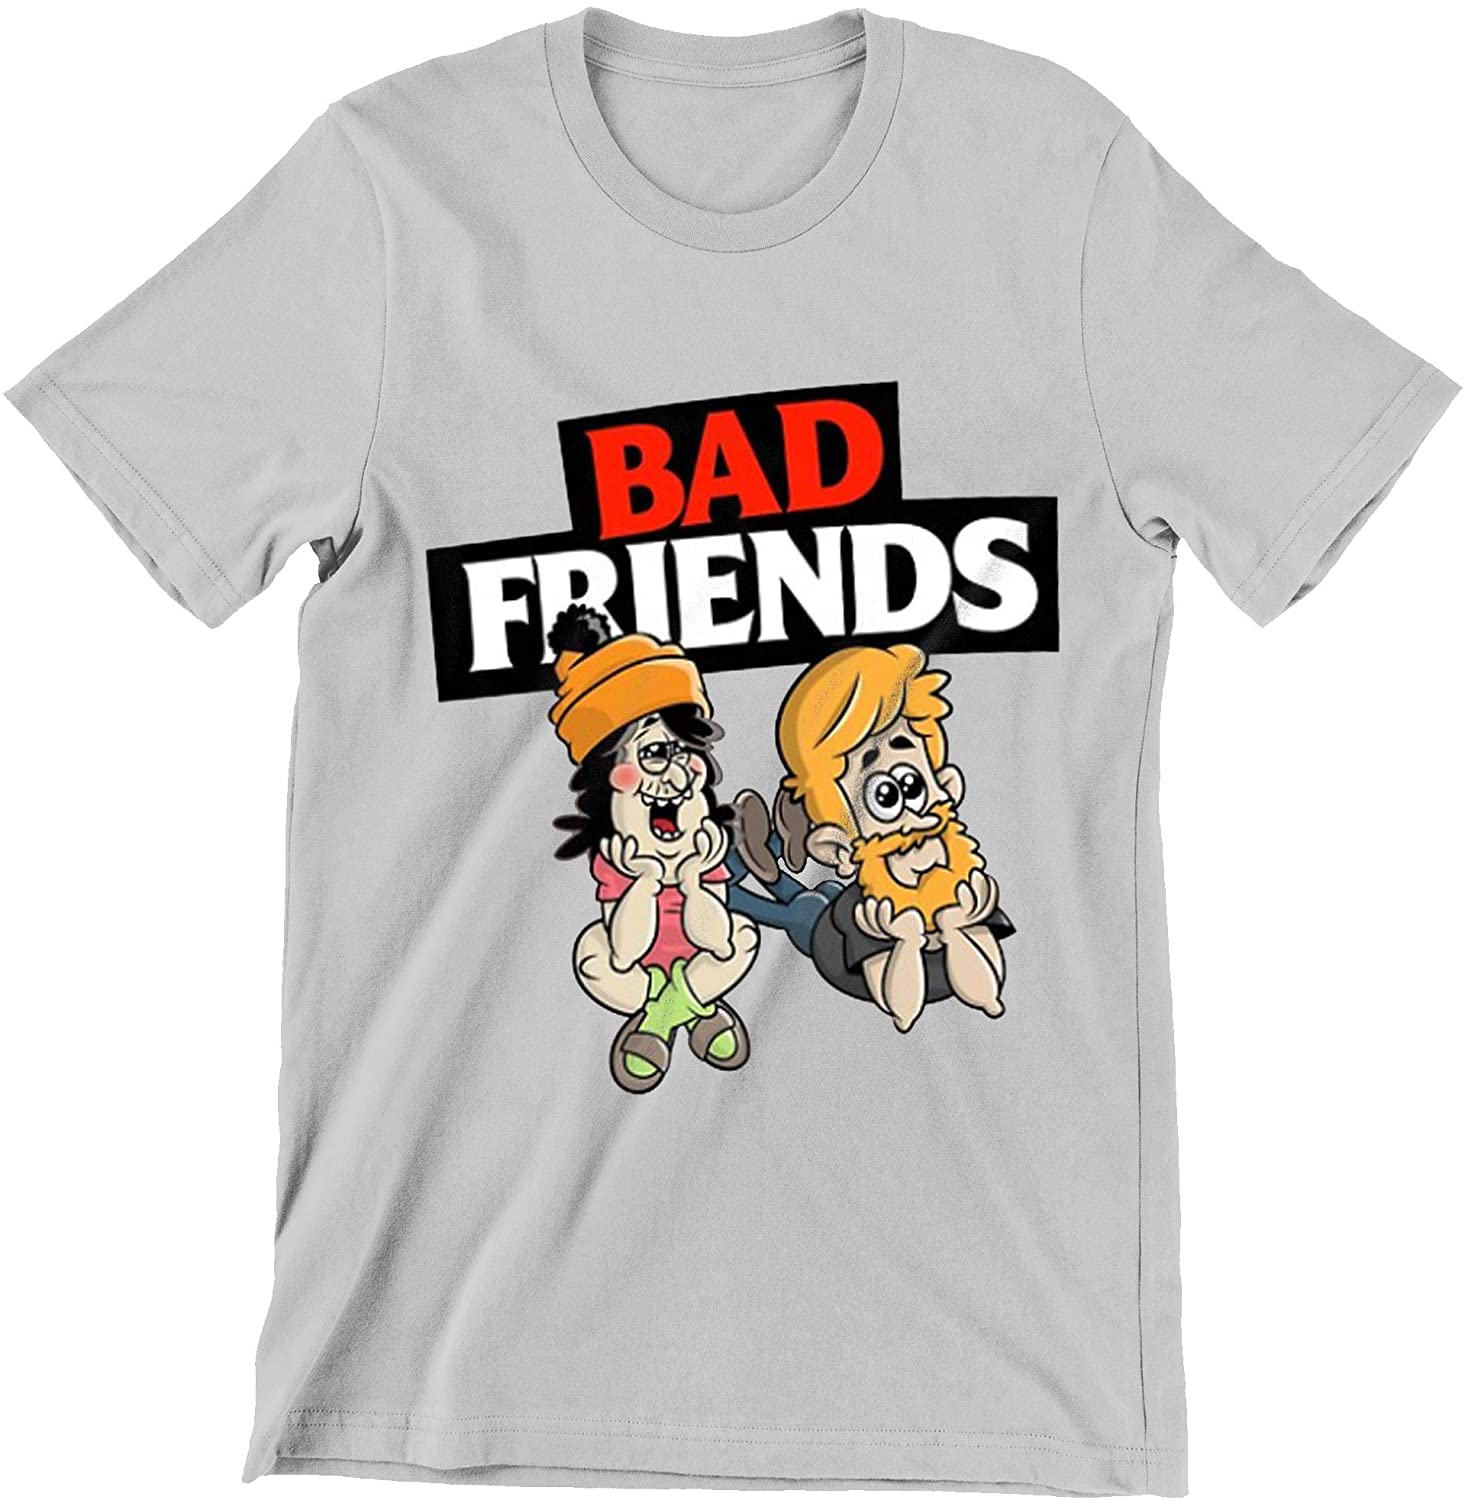 Swag Haven: Bad Friends' Official Merchandise Paradise